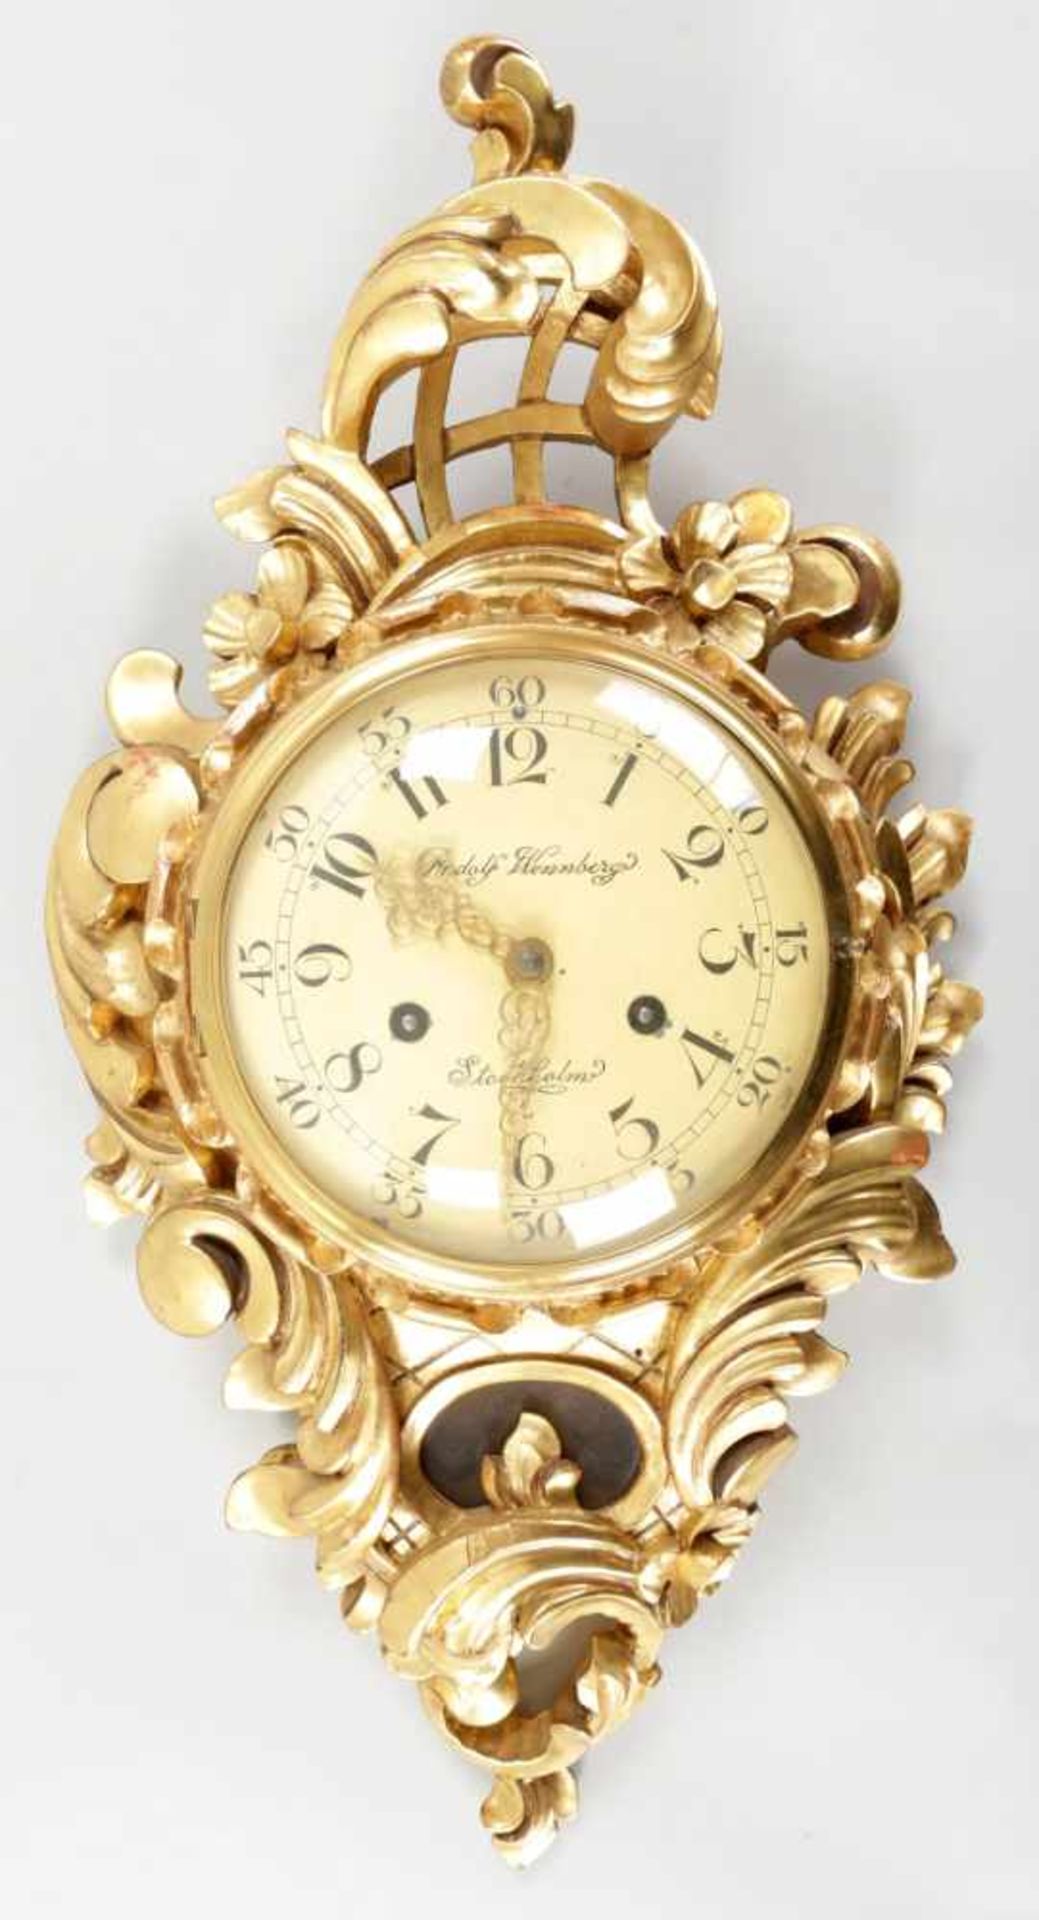 CarteluhrHolz (goldgefaßt)/Metall, R. Wennberg (Stockholm), um 1900 Das runde Uhrwerk im spitzovalem